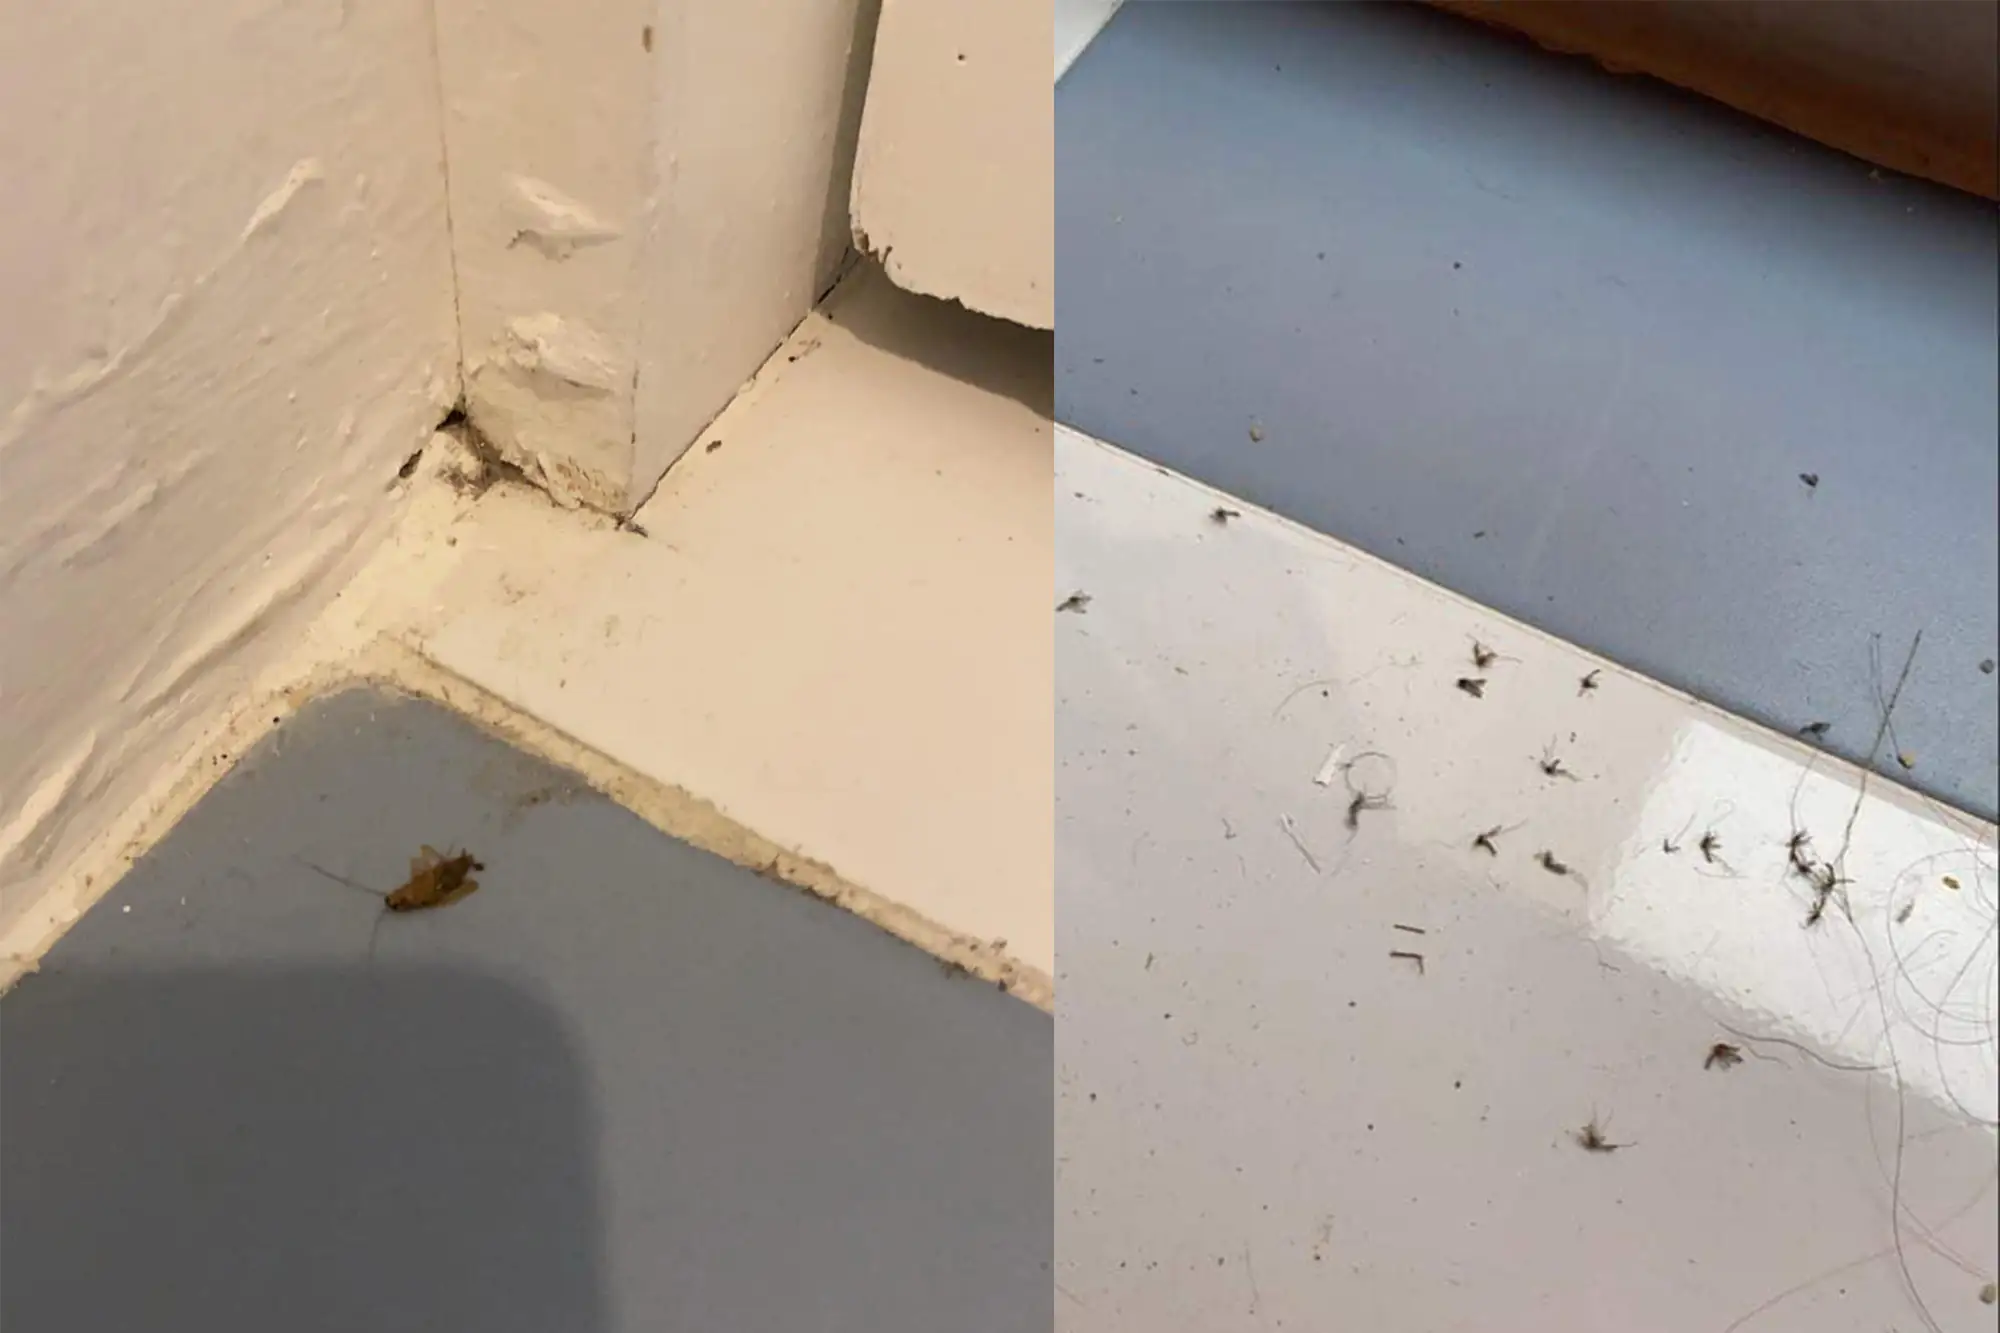 Dunyawit表示隔离期间他换了3次房间，但仍發现每间房裡都有蚊子和蟑螂（图片来源： Dunyawit Phadungsaeng脸书帐号）